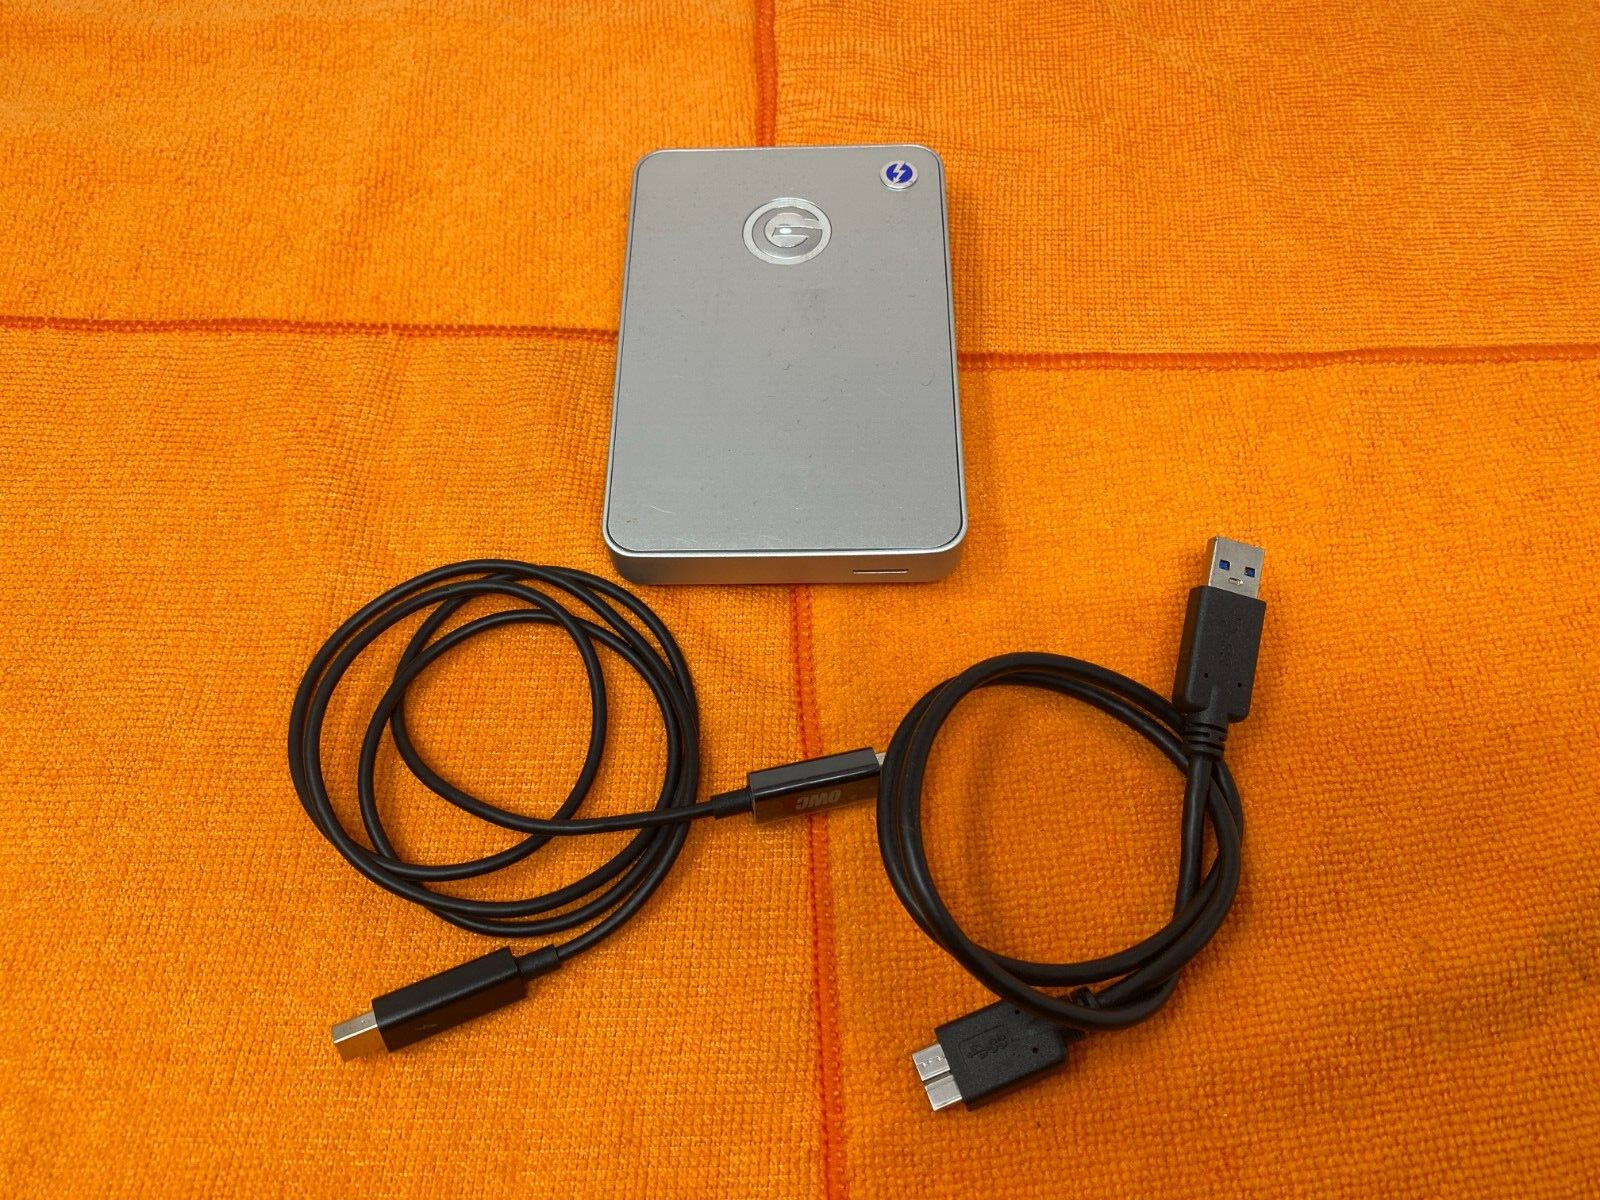 G-TECHNOLOGY G-DRIVE THUNDERBOLT USB 3.0 1TB PORTABLE HARD DRIVE USAGE 18 DAYS